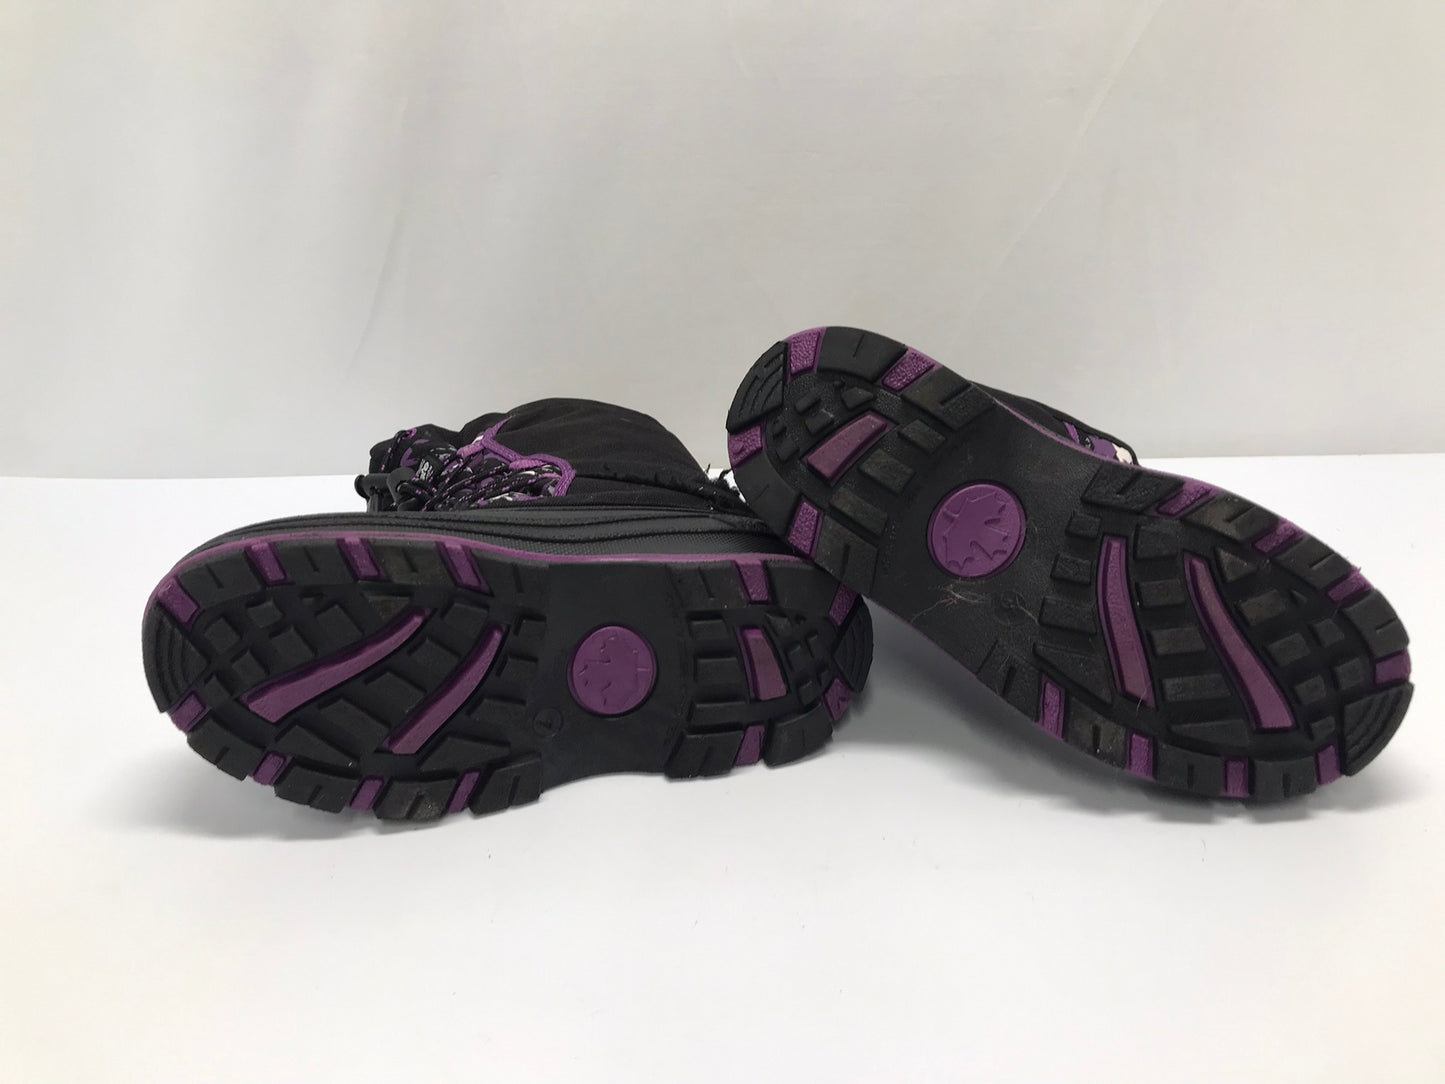 Winter Boots Child Size 4 SubZero Black Purple With Liners Excellent